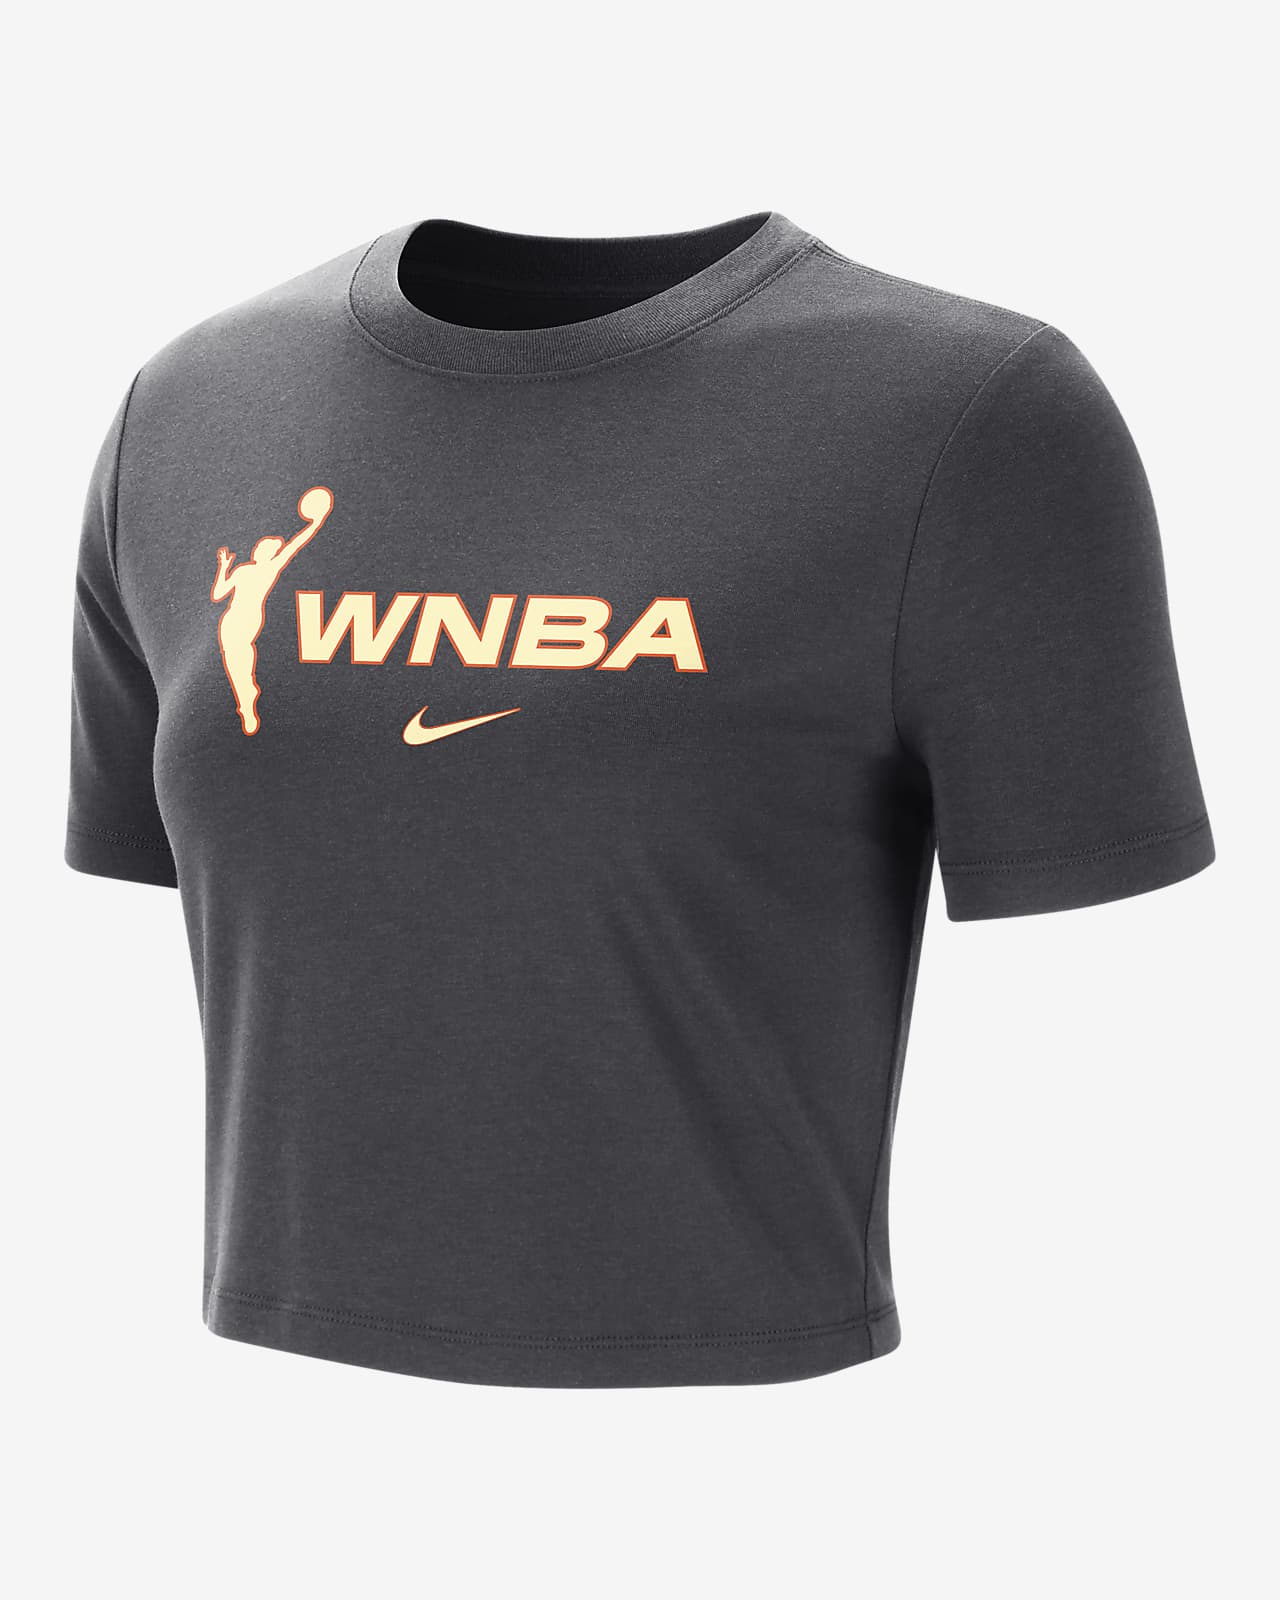 Team 13 Women's Nike WNBA Crop T-Shirt